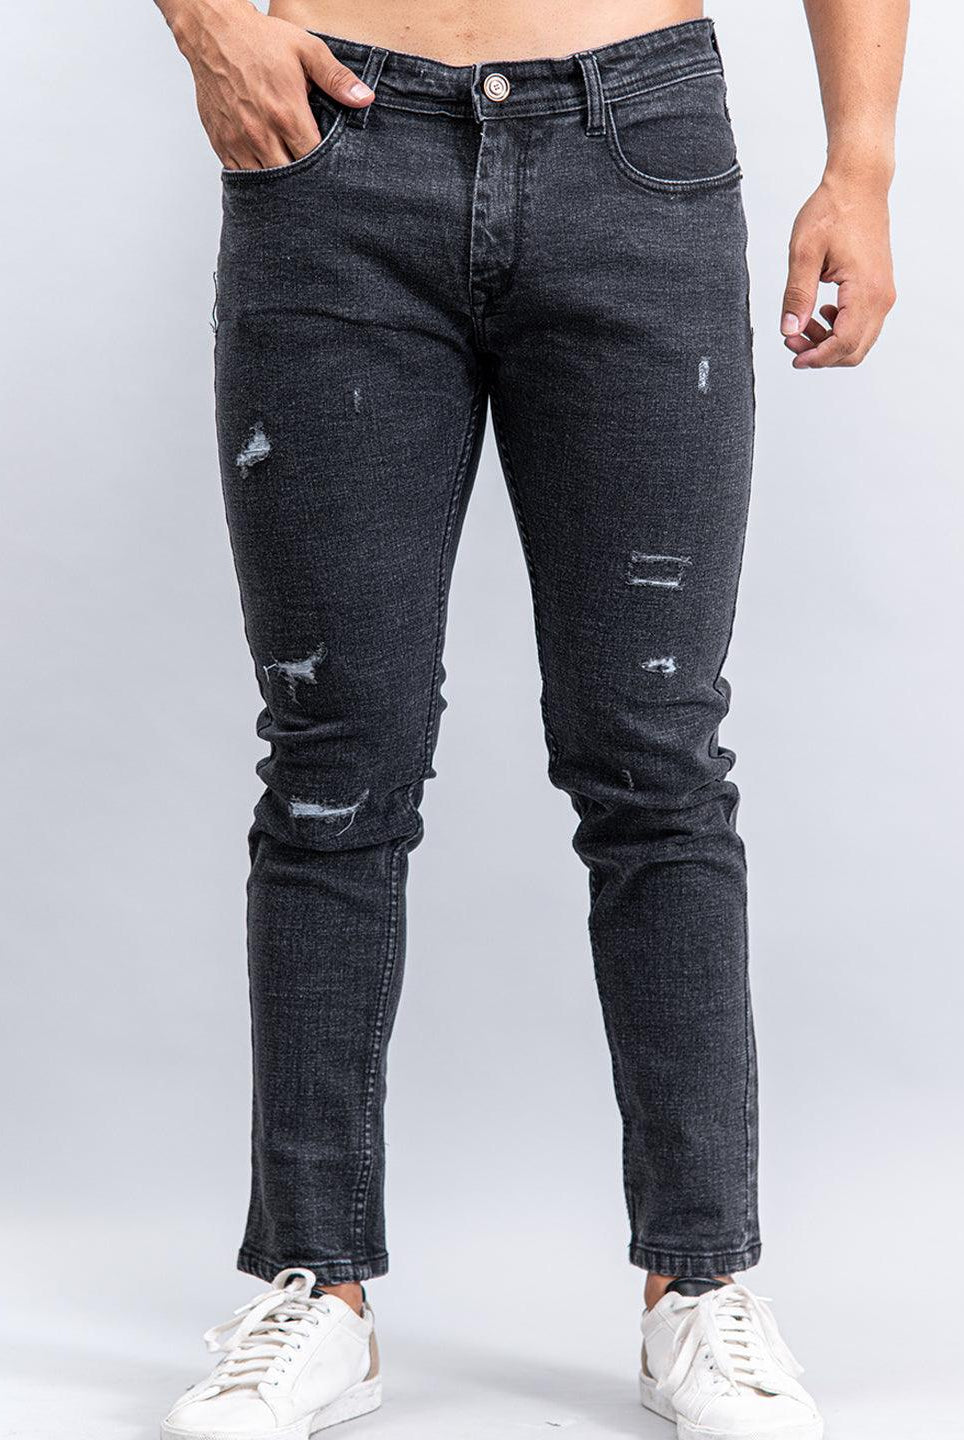 dark grey denim ankle length stretchable mens jeans